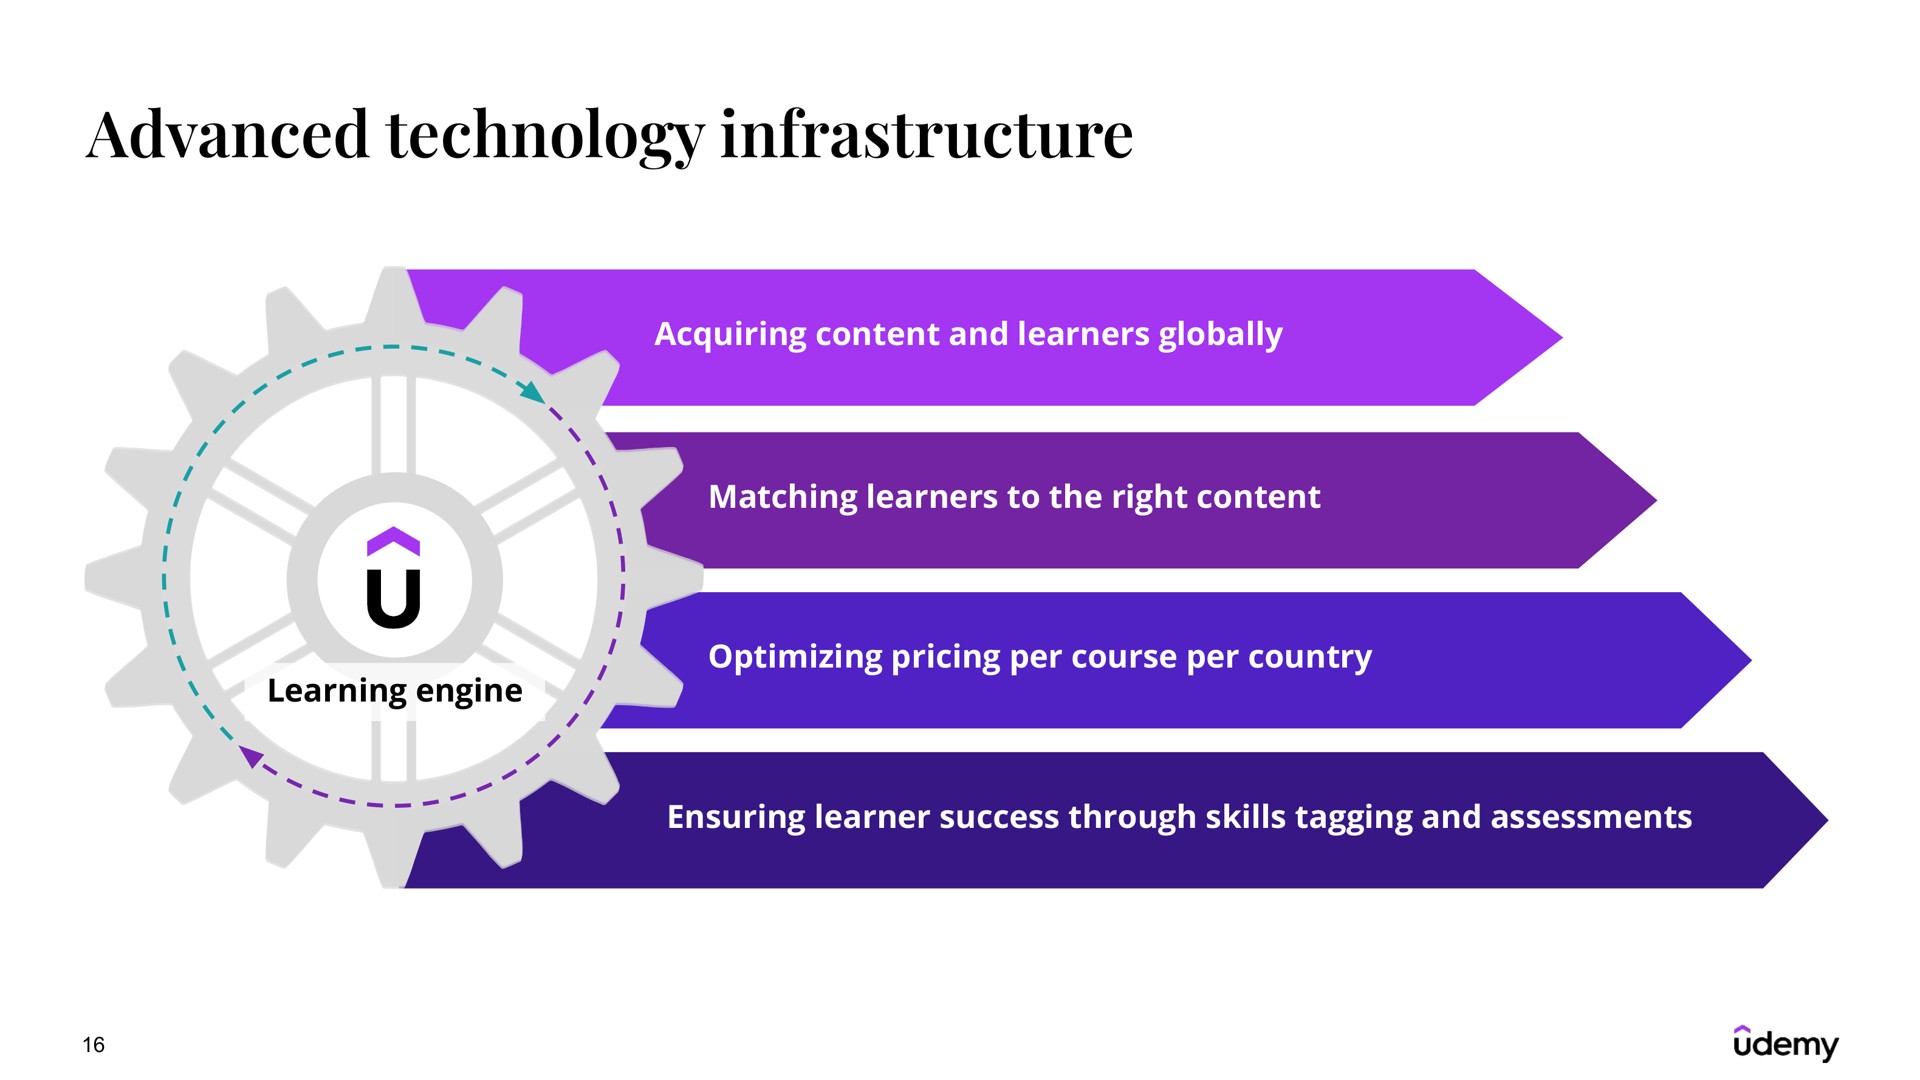 advanced technology infrastructure | Udemy